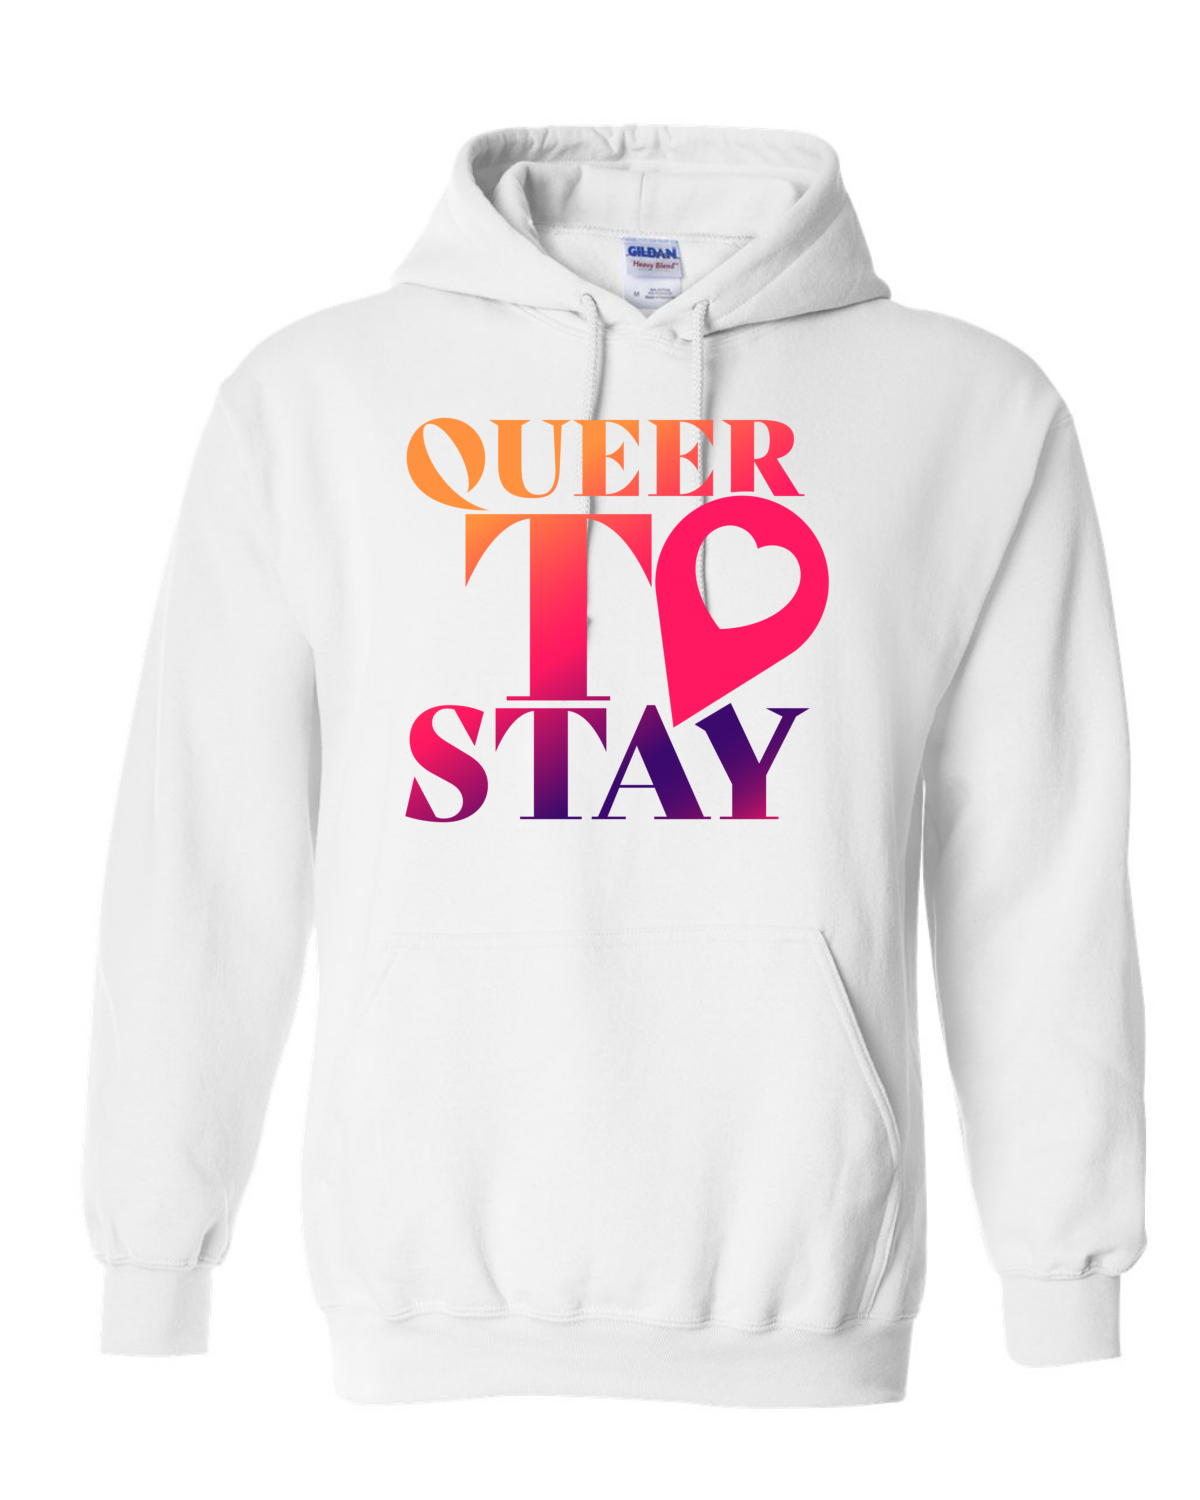 SHOWTIME Queer to Stay Logo Fleece Hooded Sweatshirt